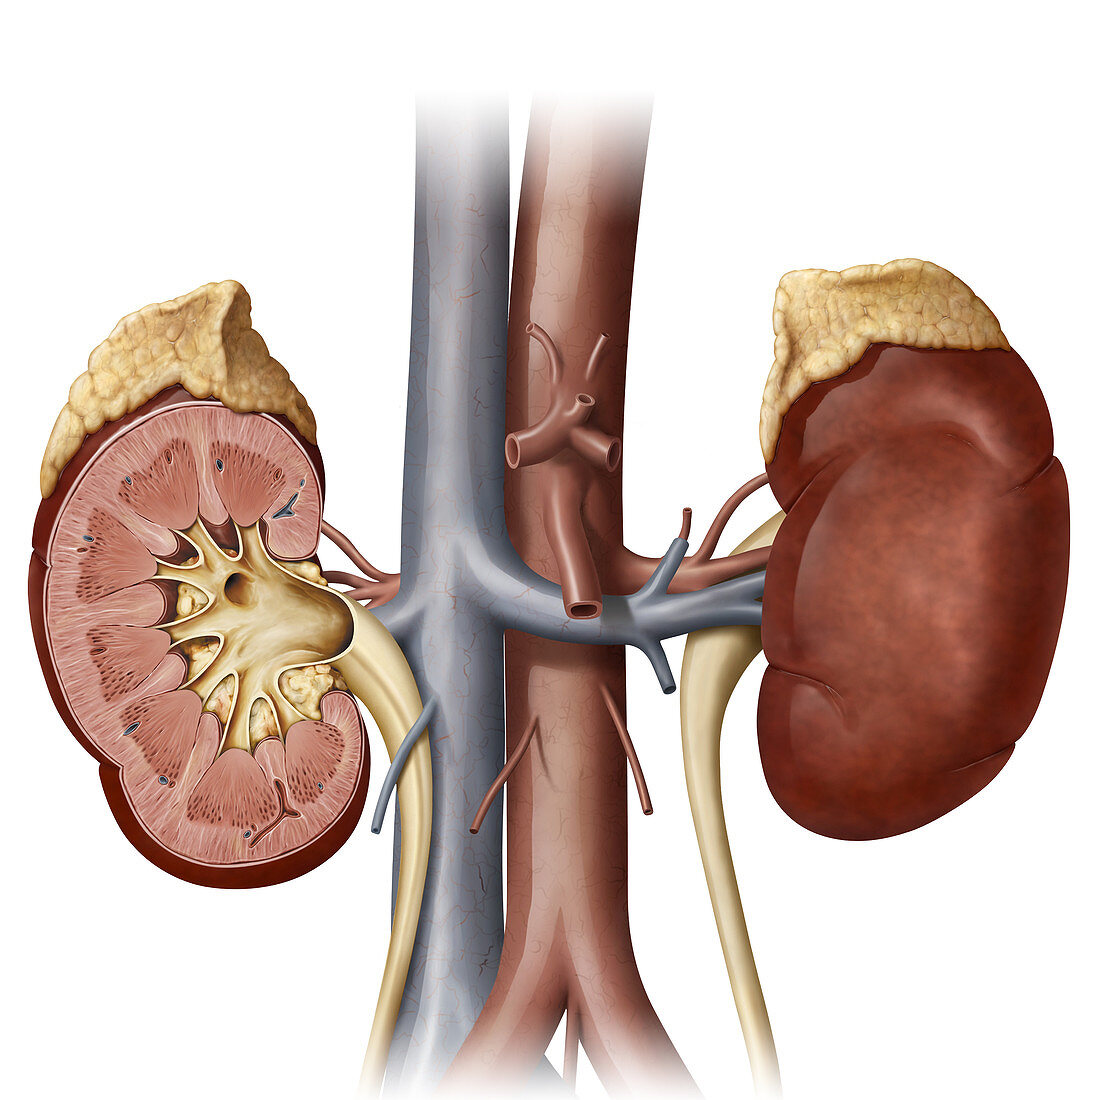 Organs of the Urinary System, illustration